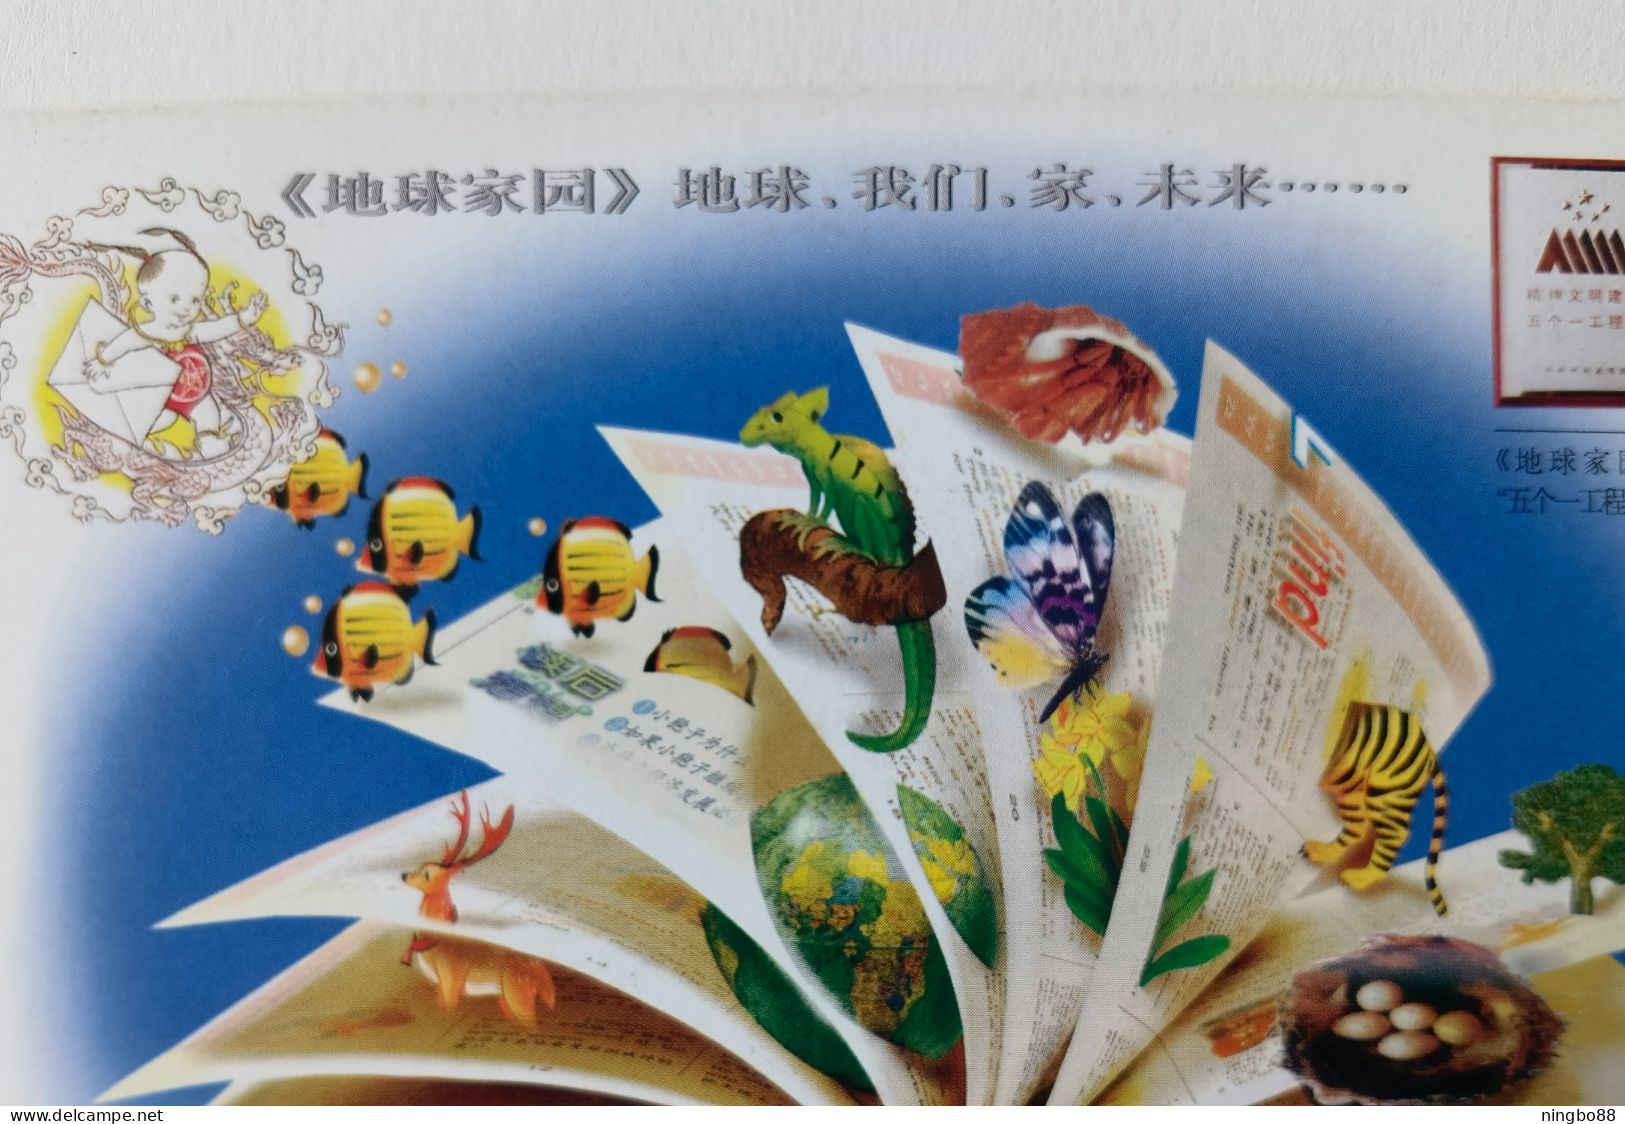 Hypsilophodon Dinosaur On The Tree,shell,seashell,China 1998 Shanxi Education Press Planet Homelands Pre-stamped Card - Fossiles